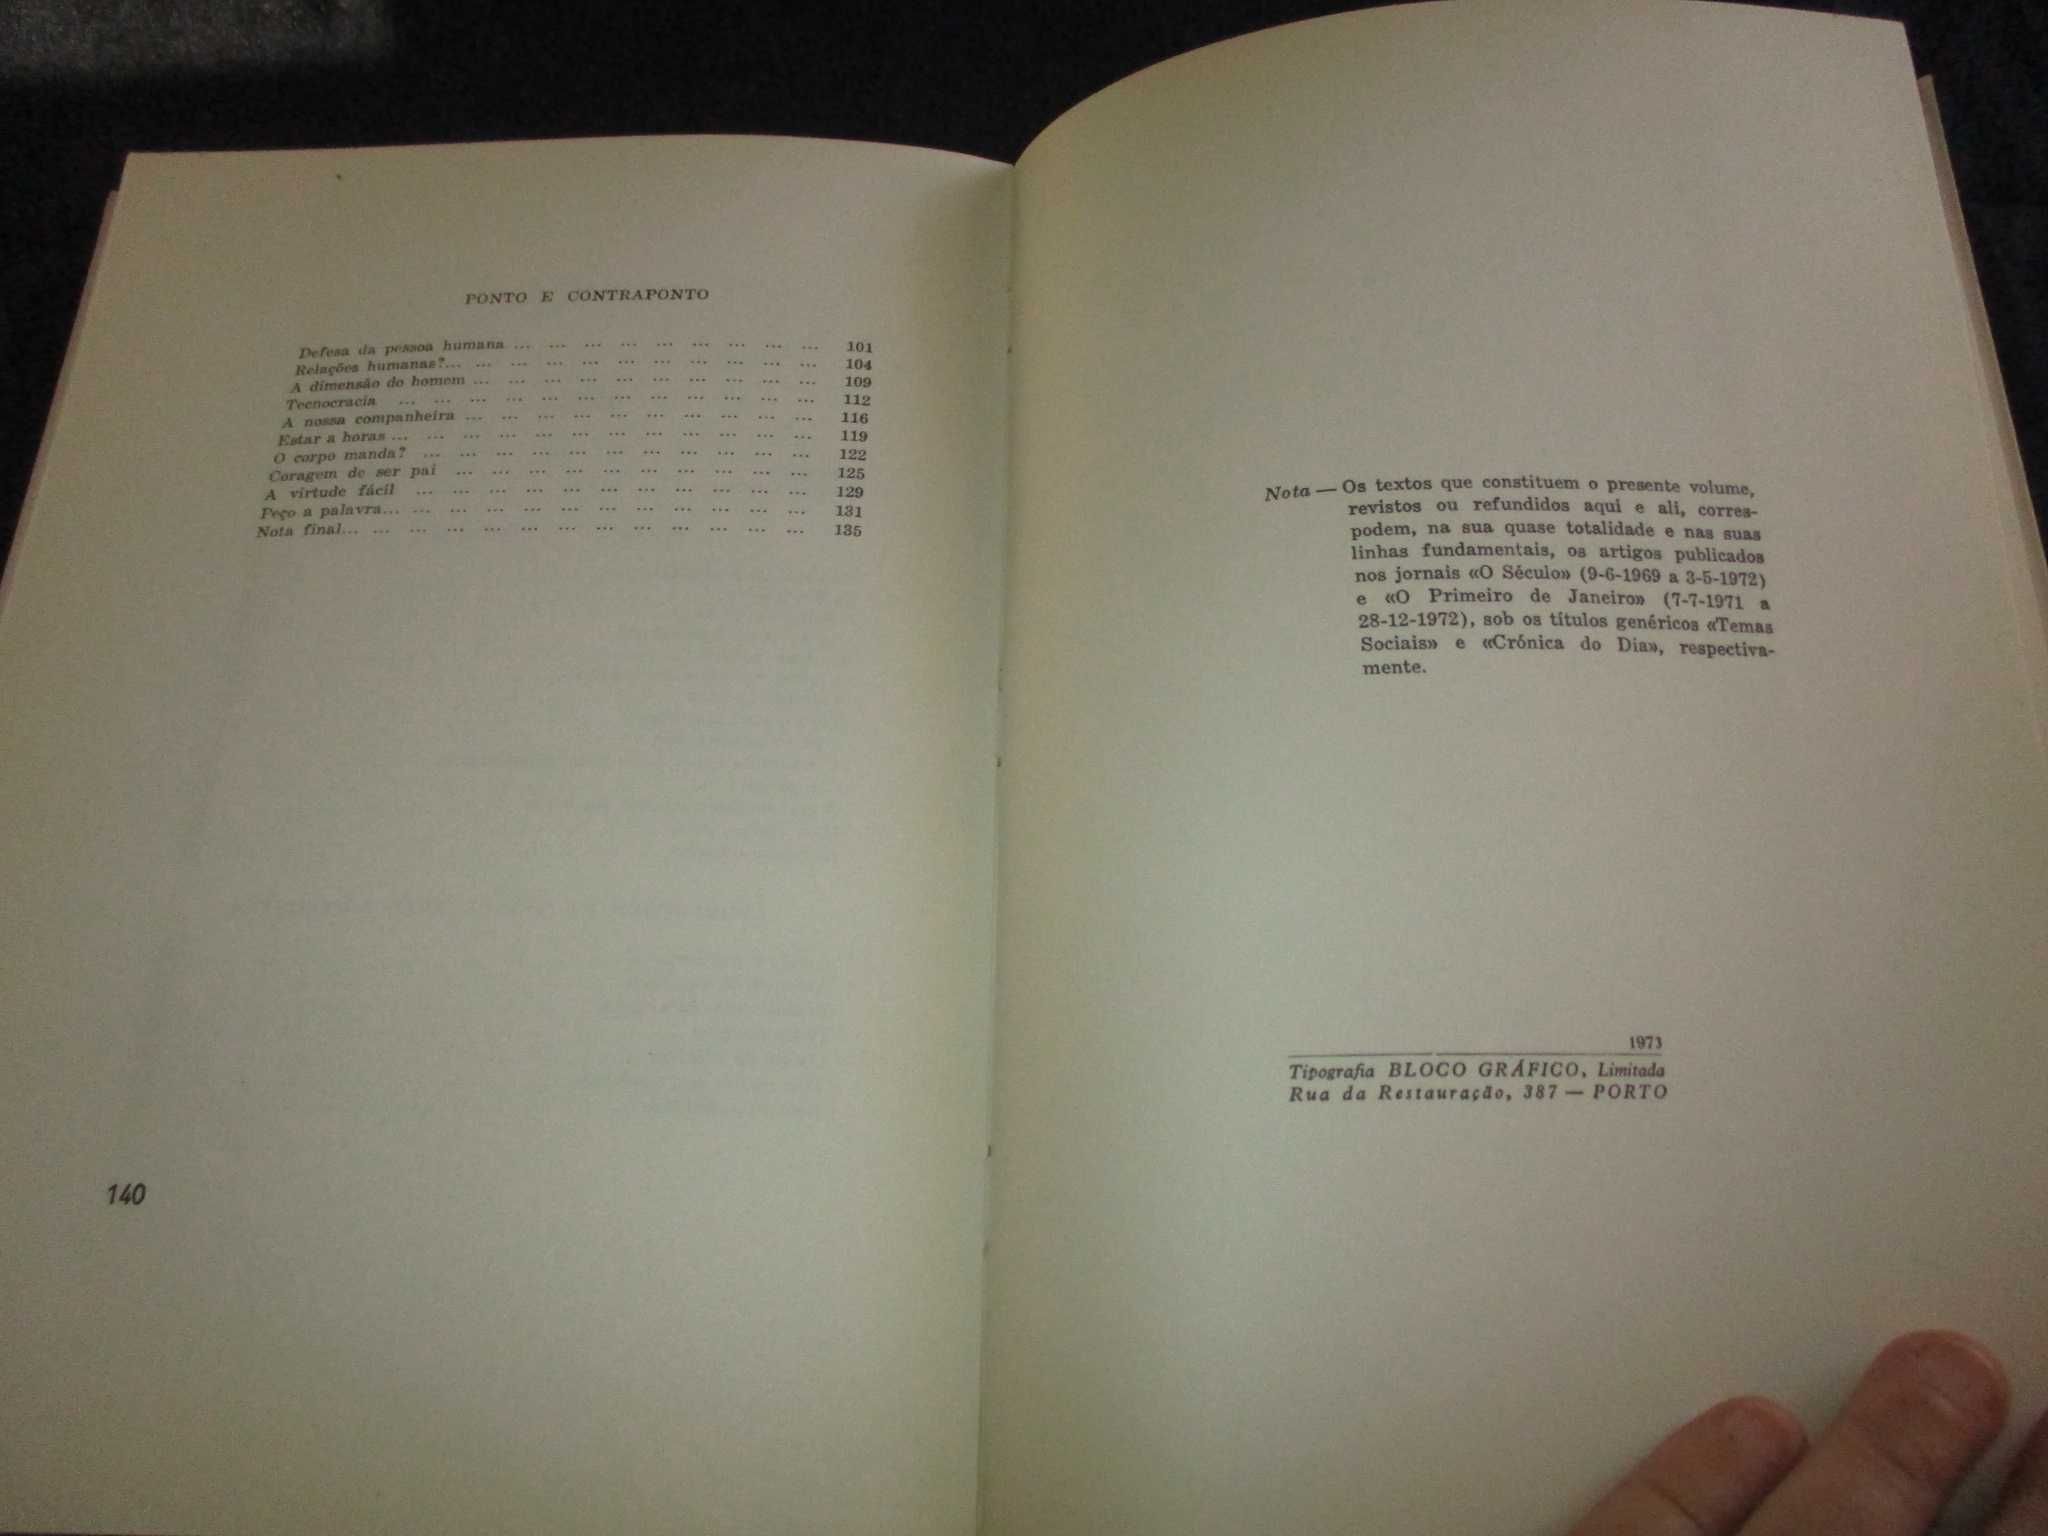 Livro Os bons obreiros e os mistificadores 1973